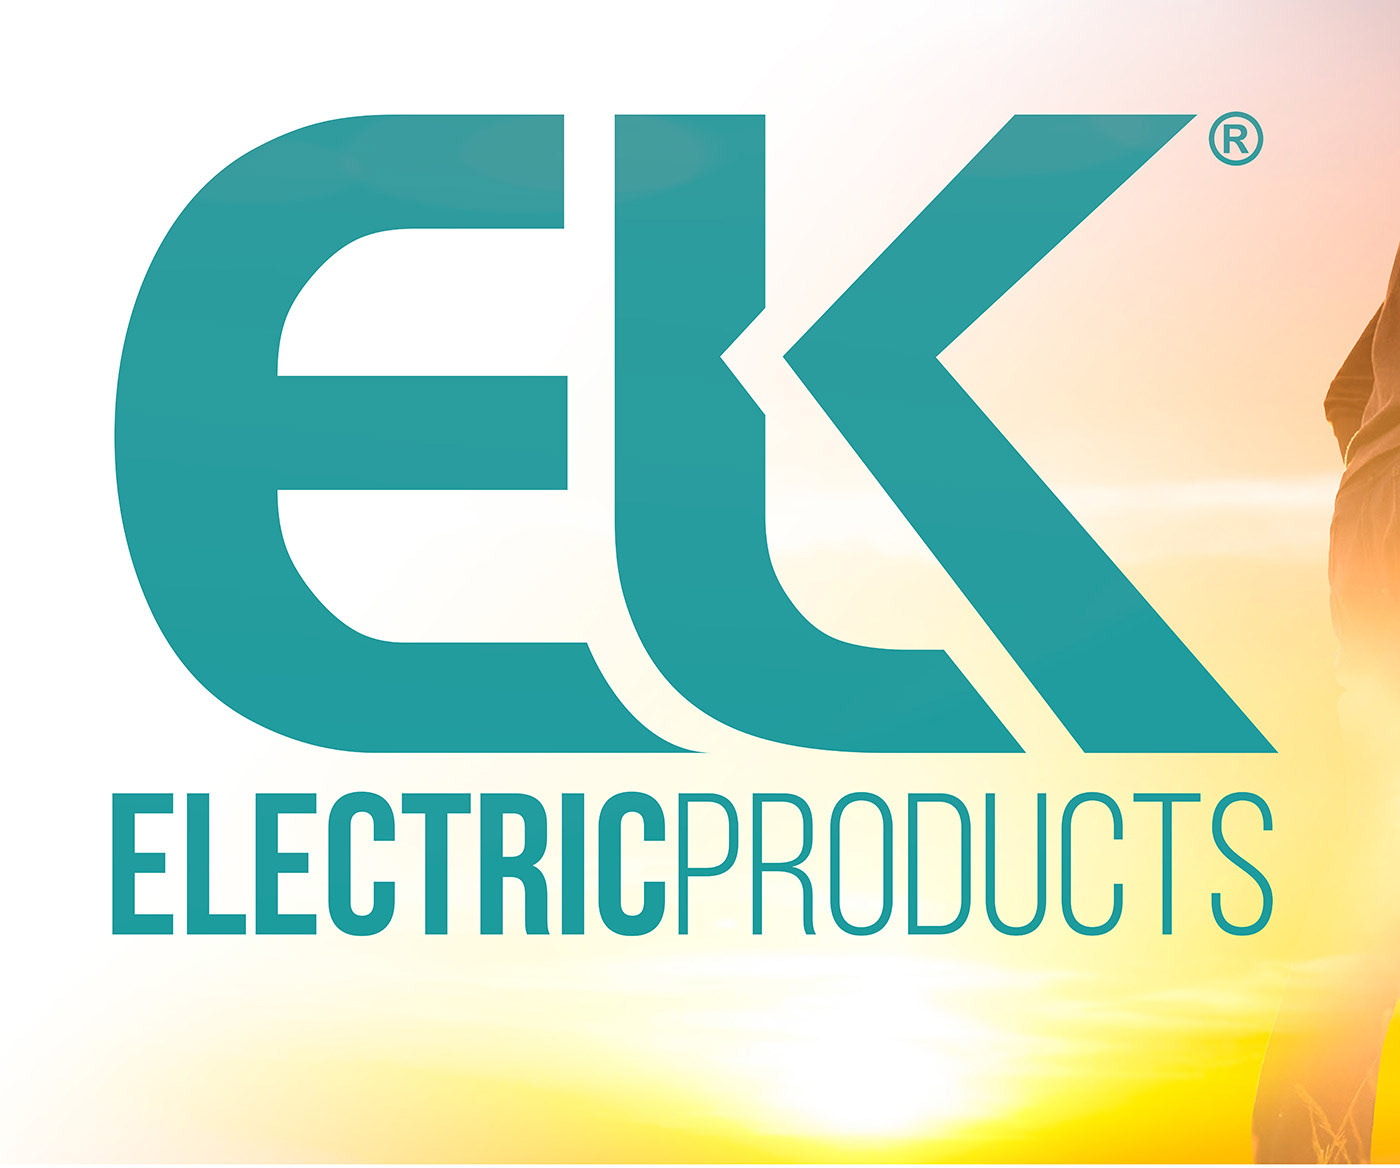 billboard design Costa Rica ecofriendly electric products